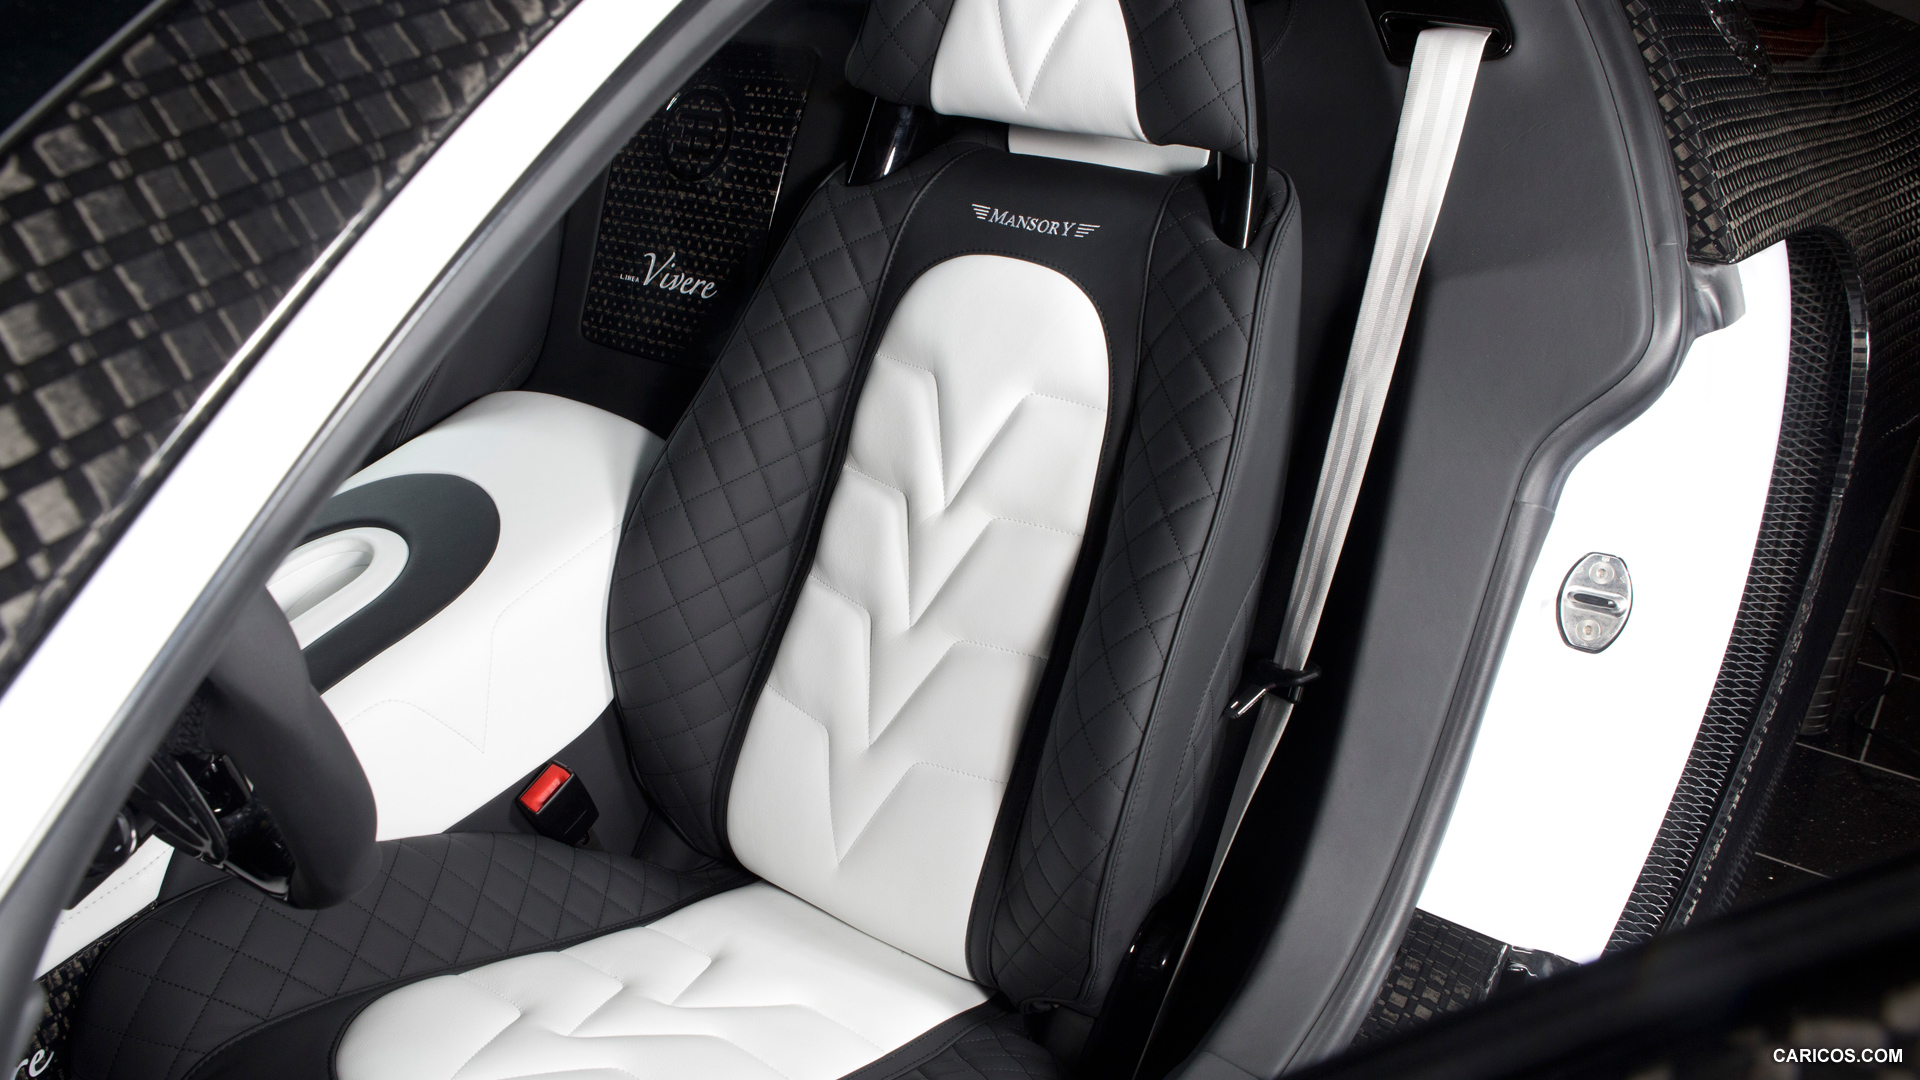 2014 Mansory Vivere based on Bugatti Veyron 16.4  - Interior, #5 of 8